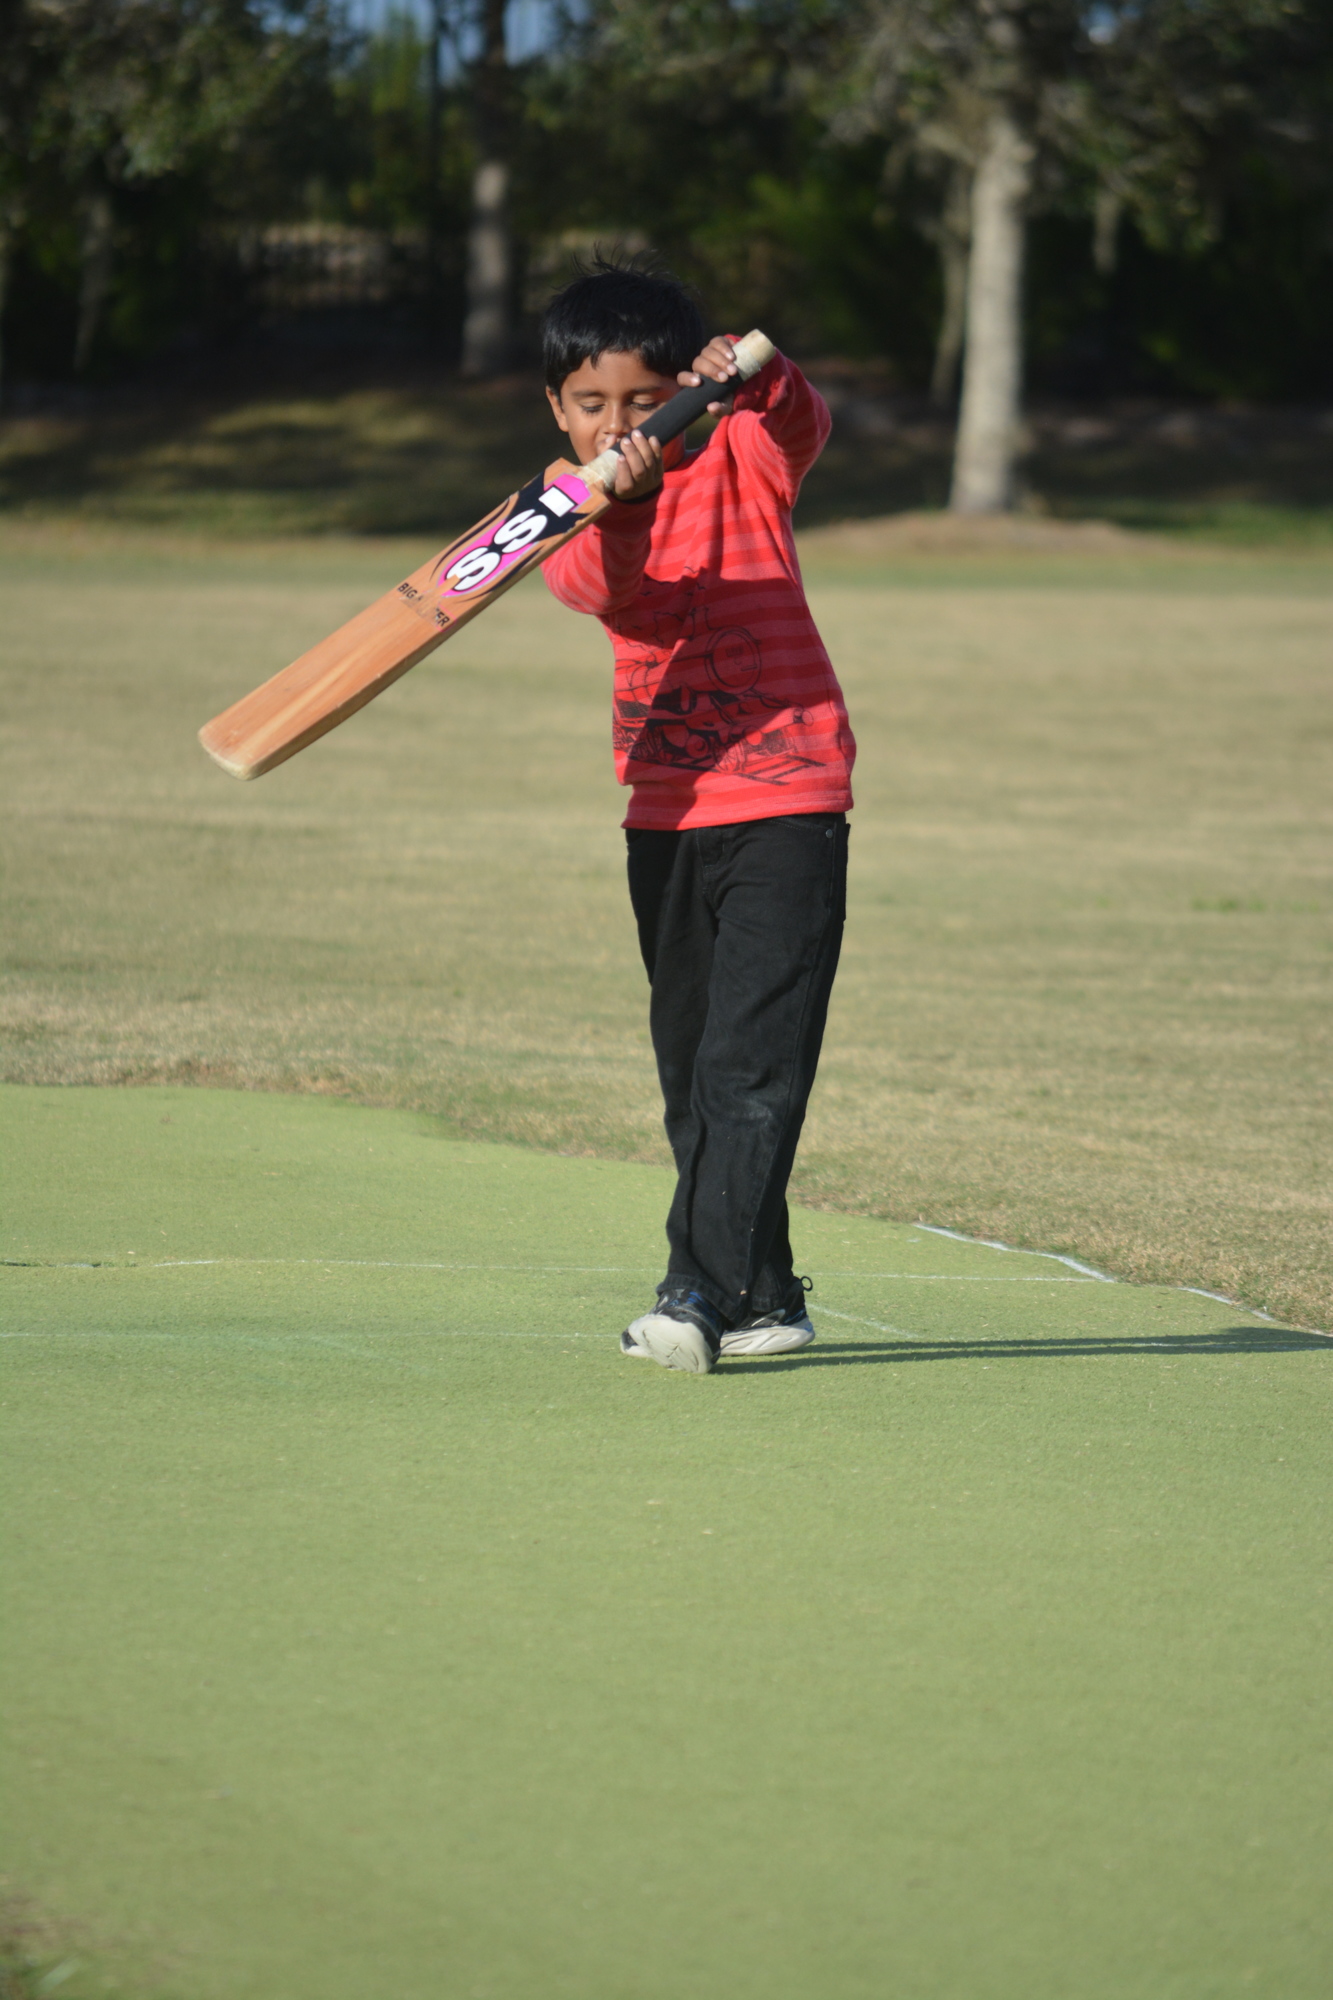 Srihaan Dhinesh, 6, swings the bat.